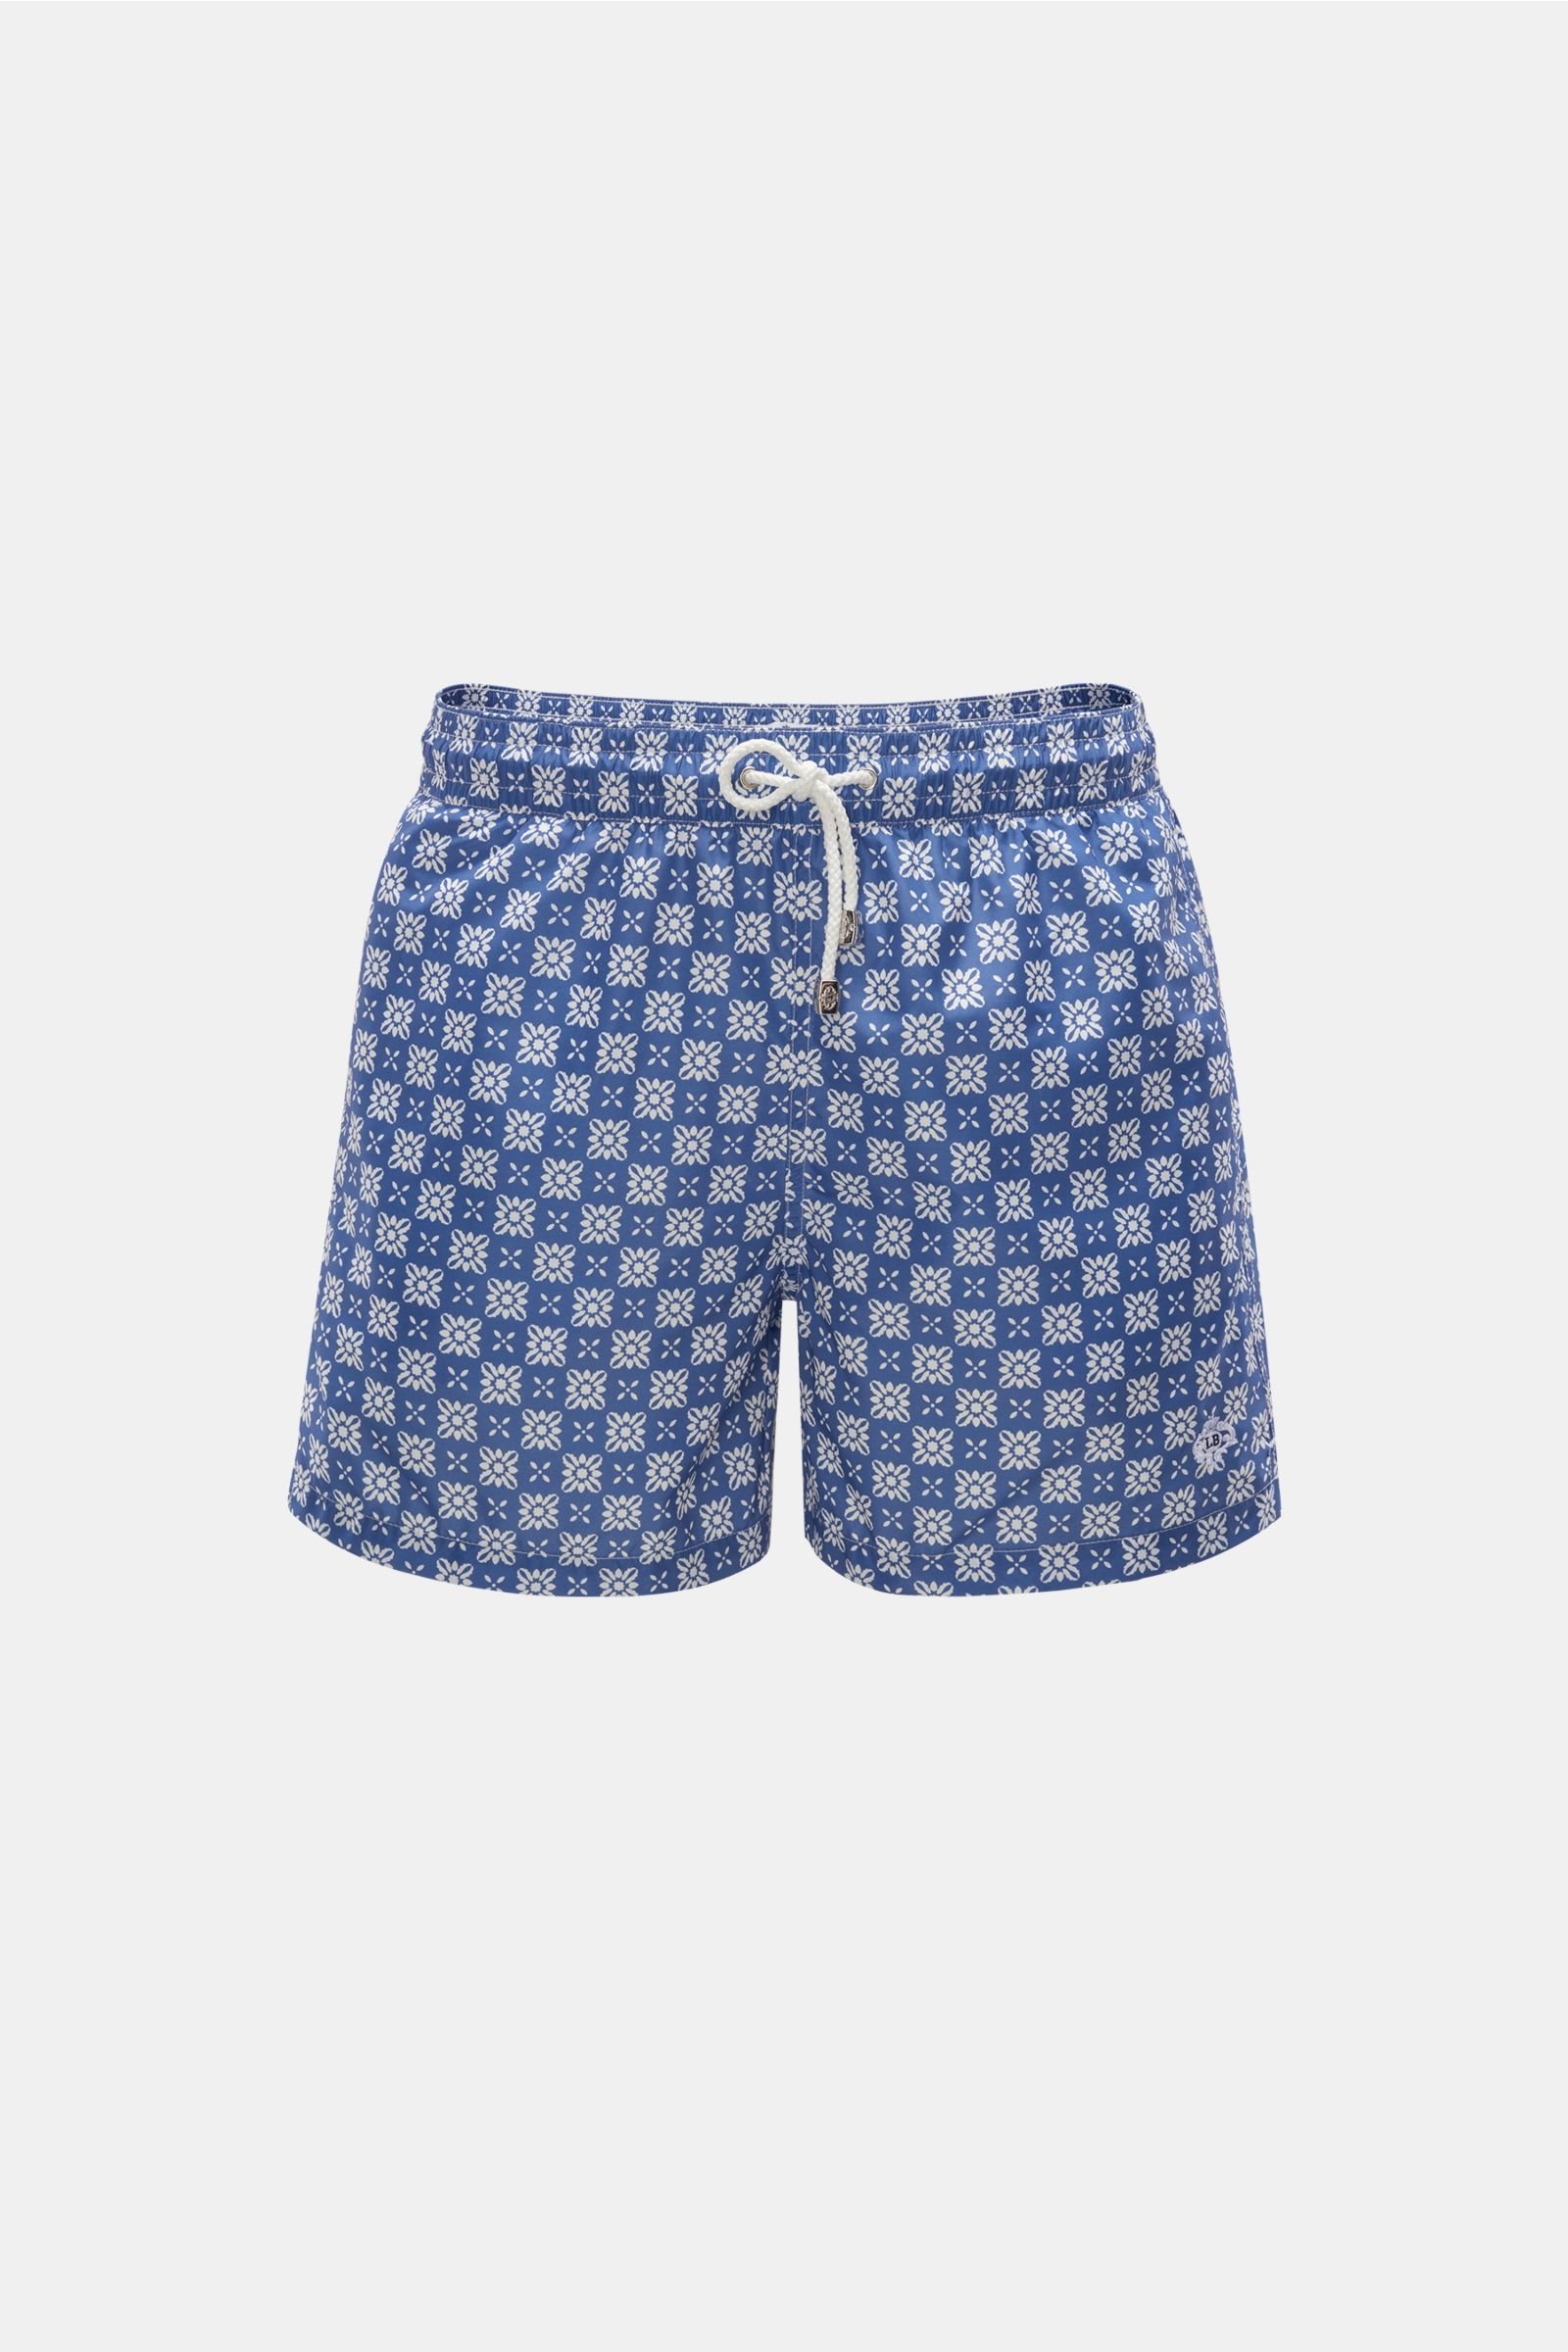 Swim shorts grey-blue patterned